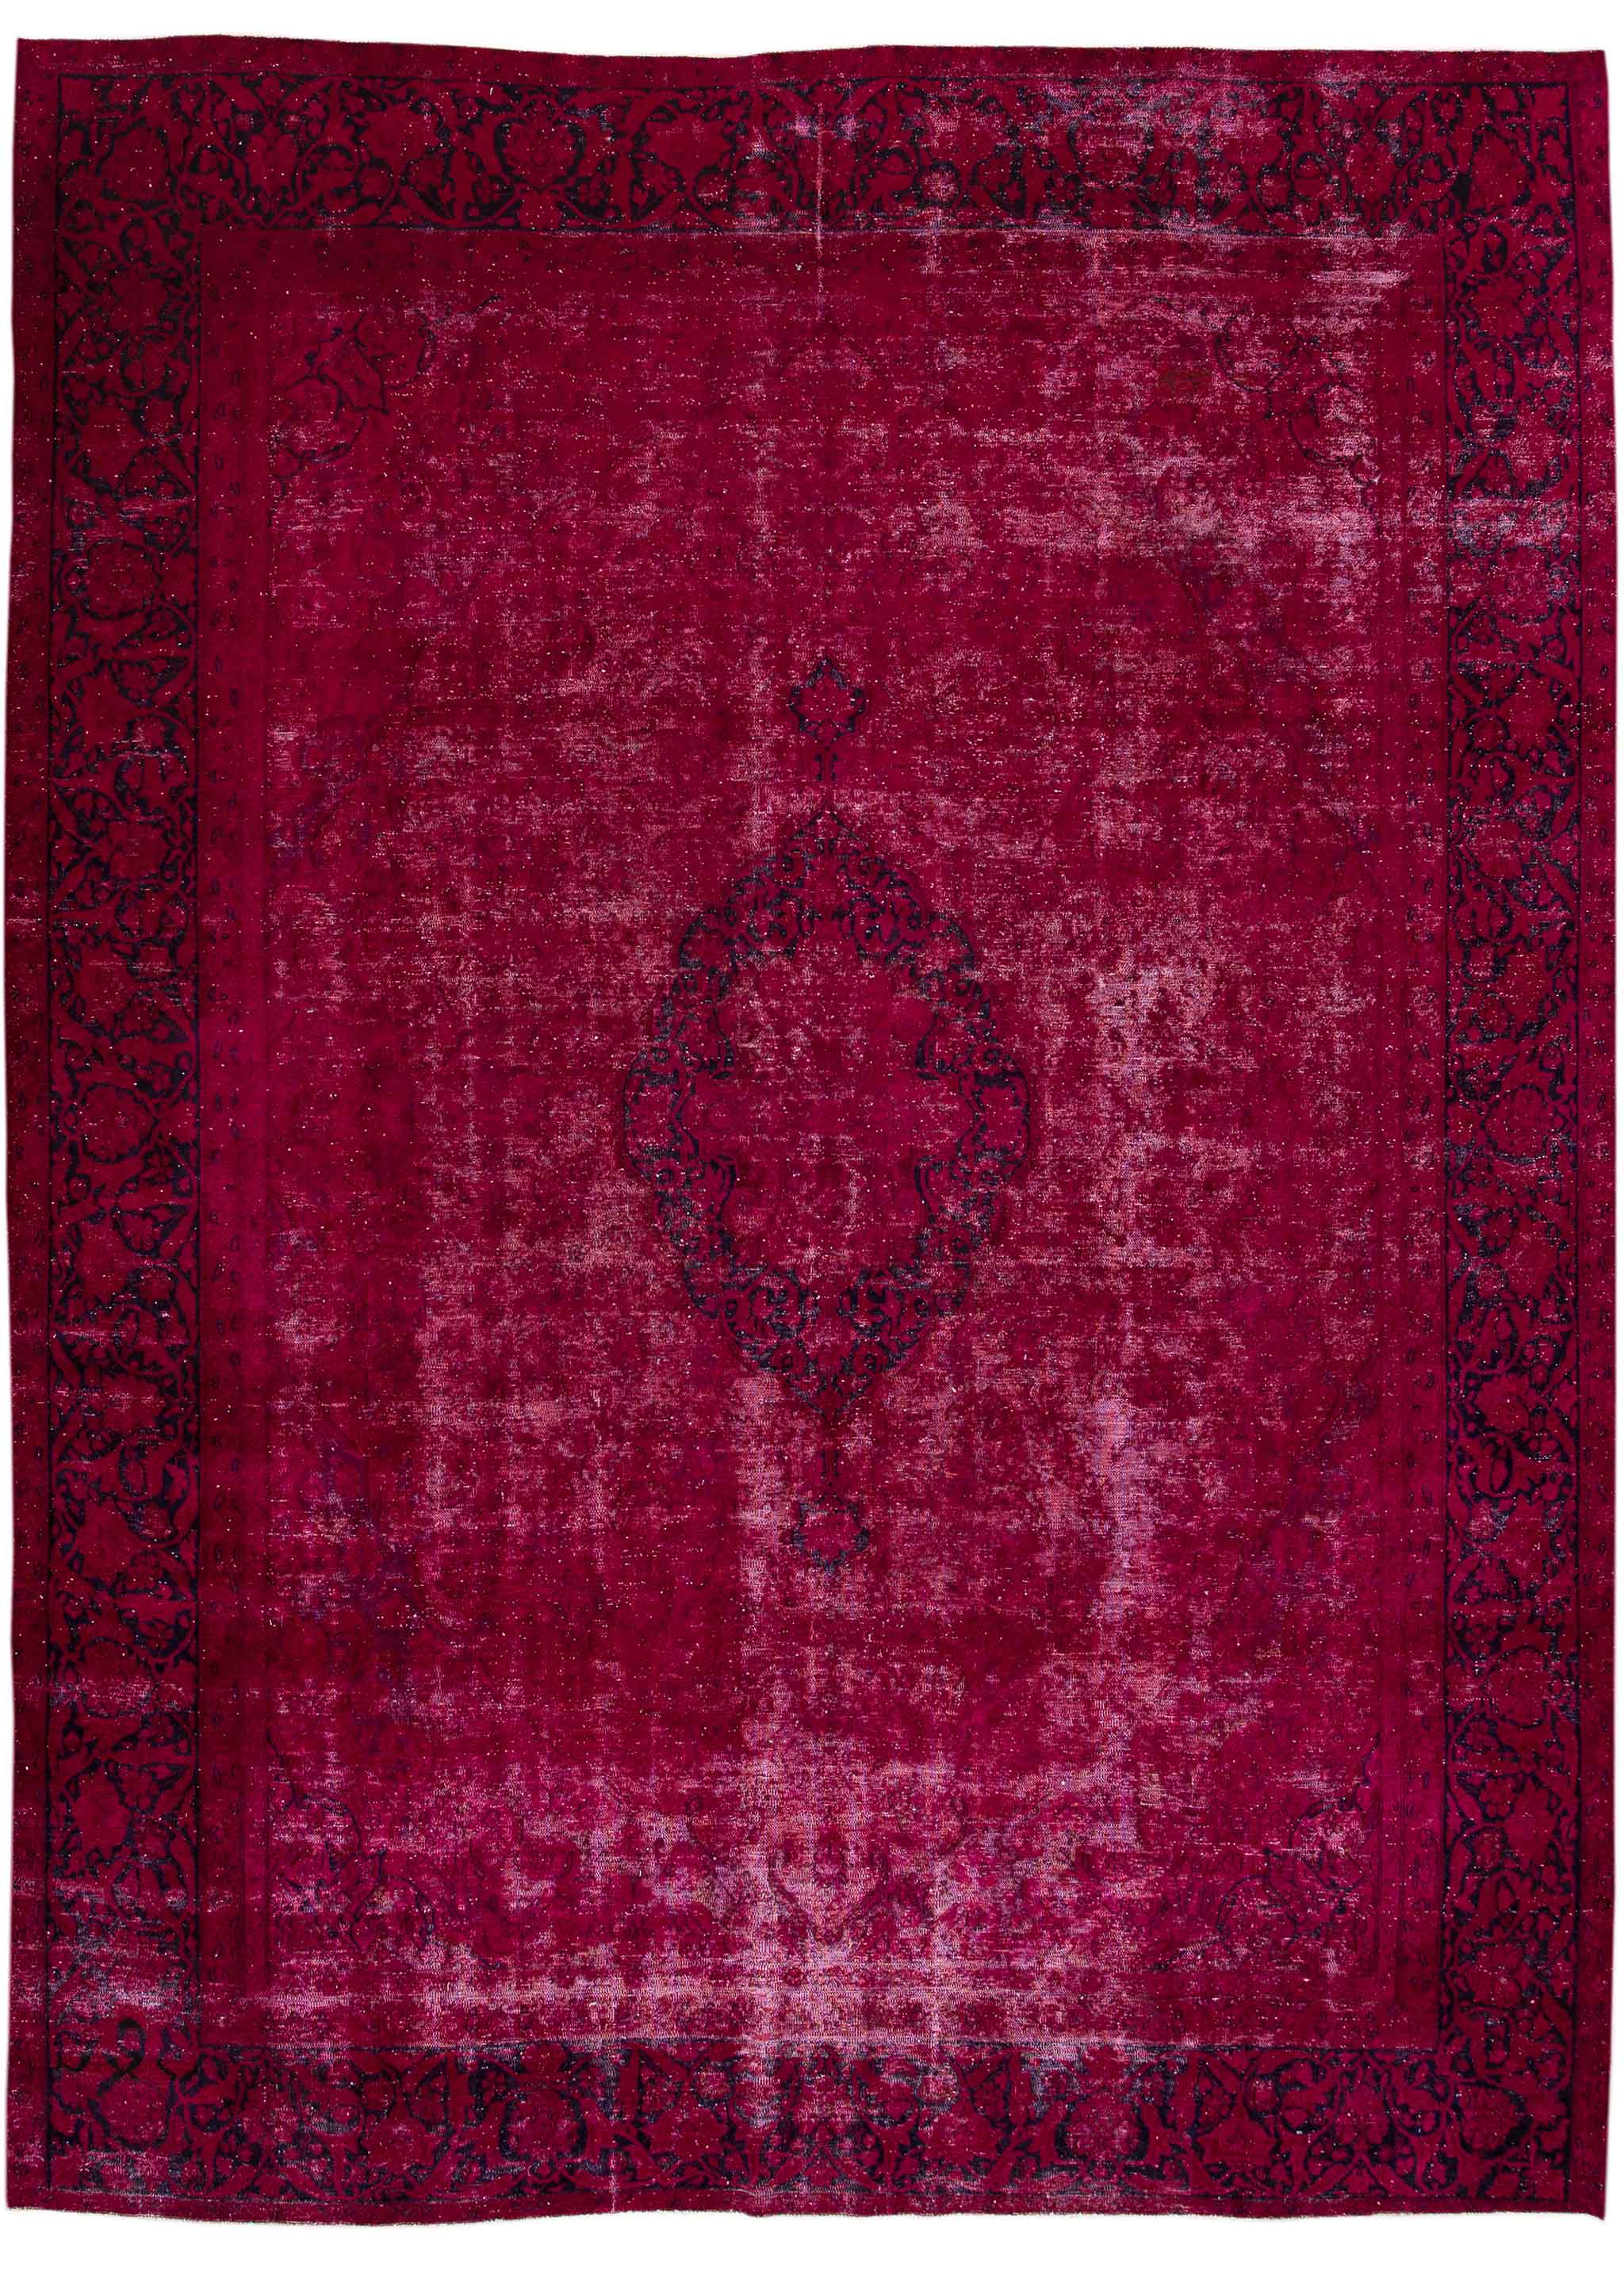 Overdyed carpet from Apadana | Image courtesy of Apadana